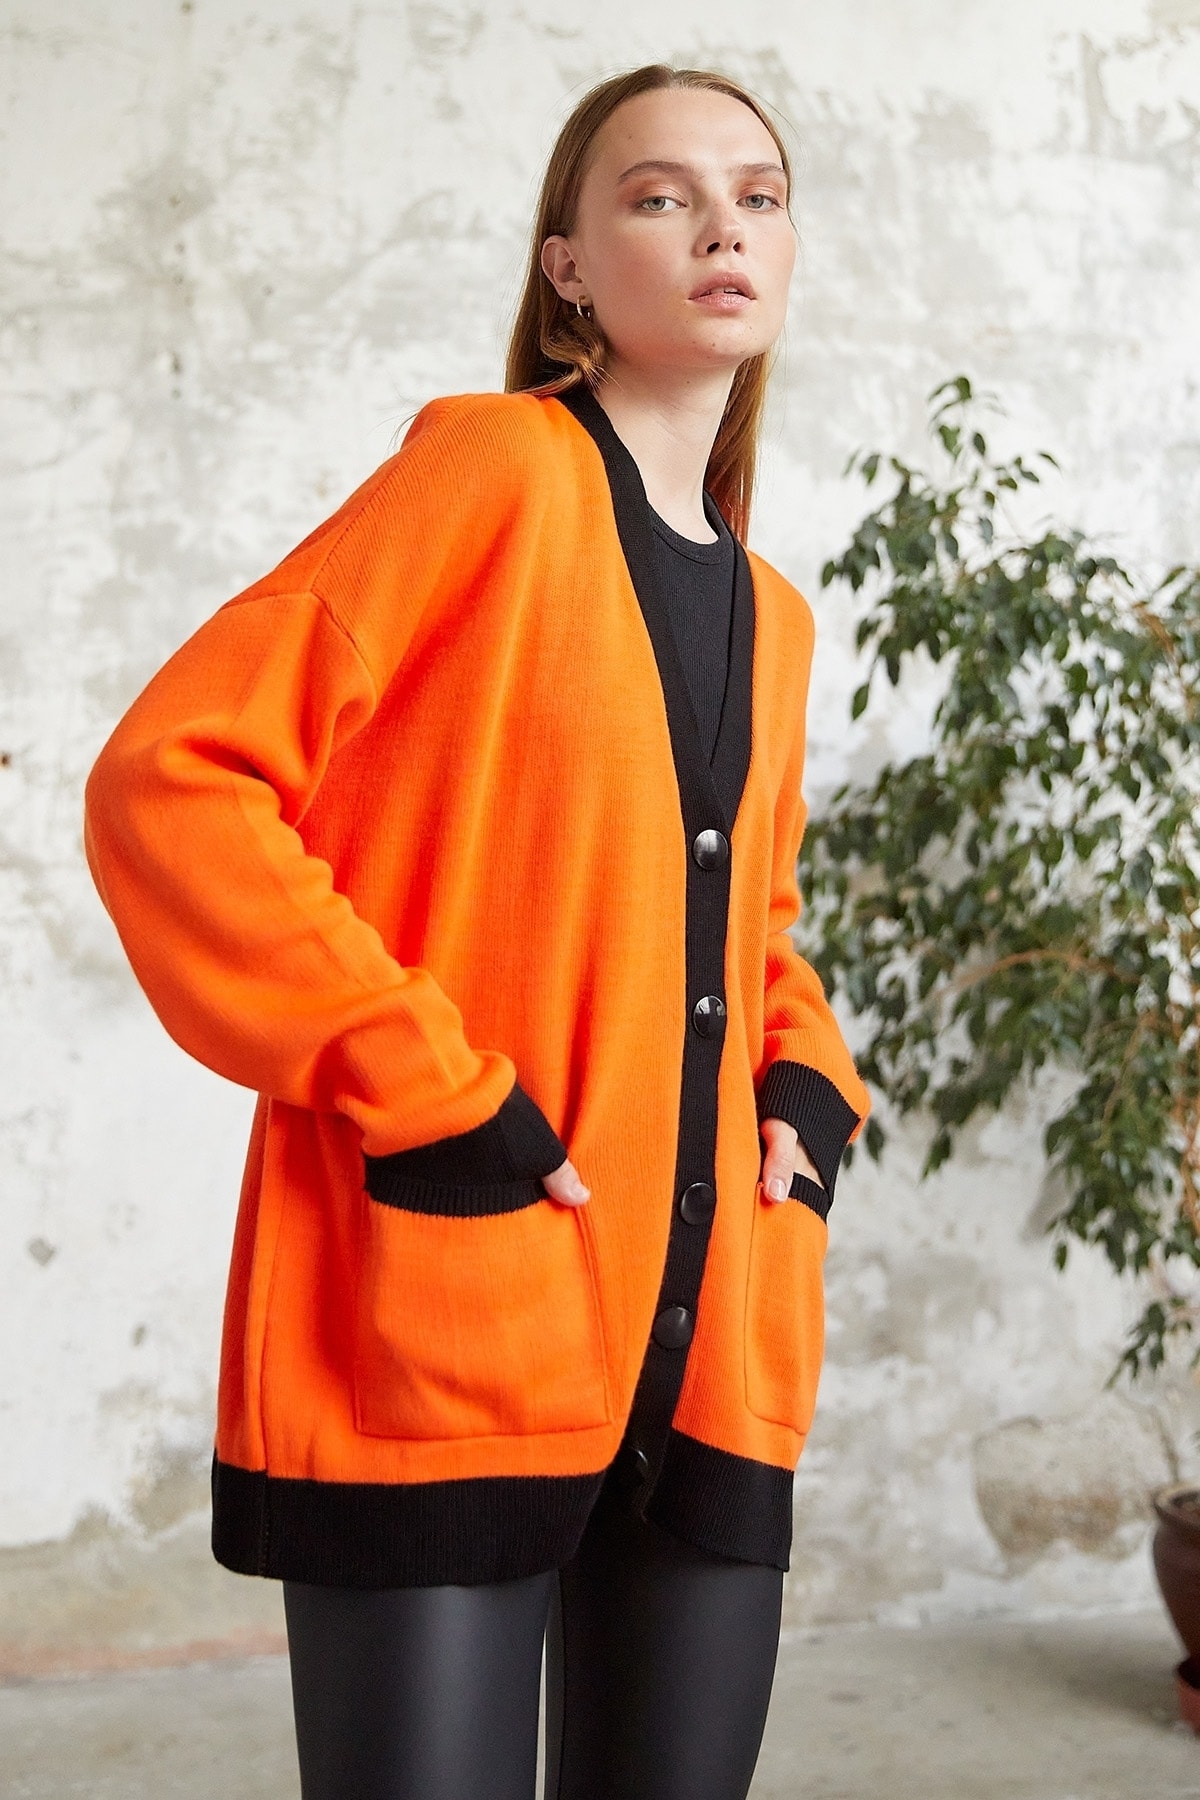 InStyle Vega Pocket Knitwear Cardigan - Orange